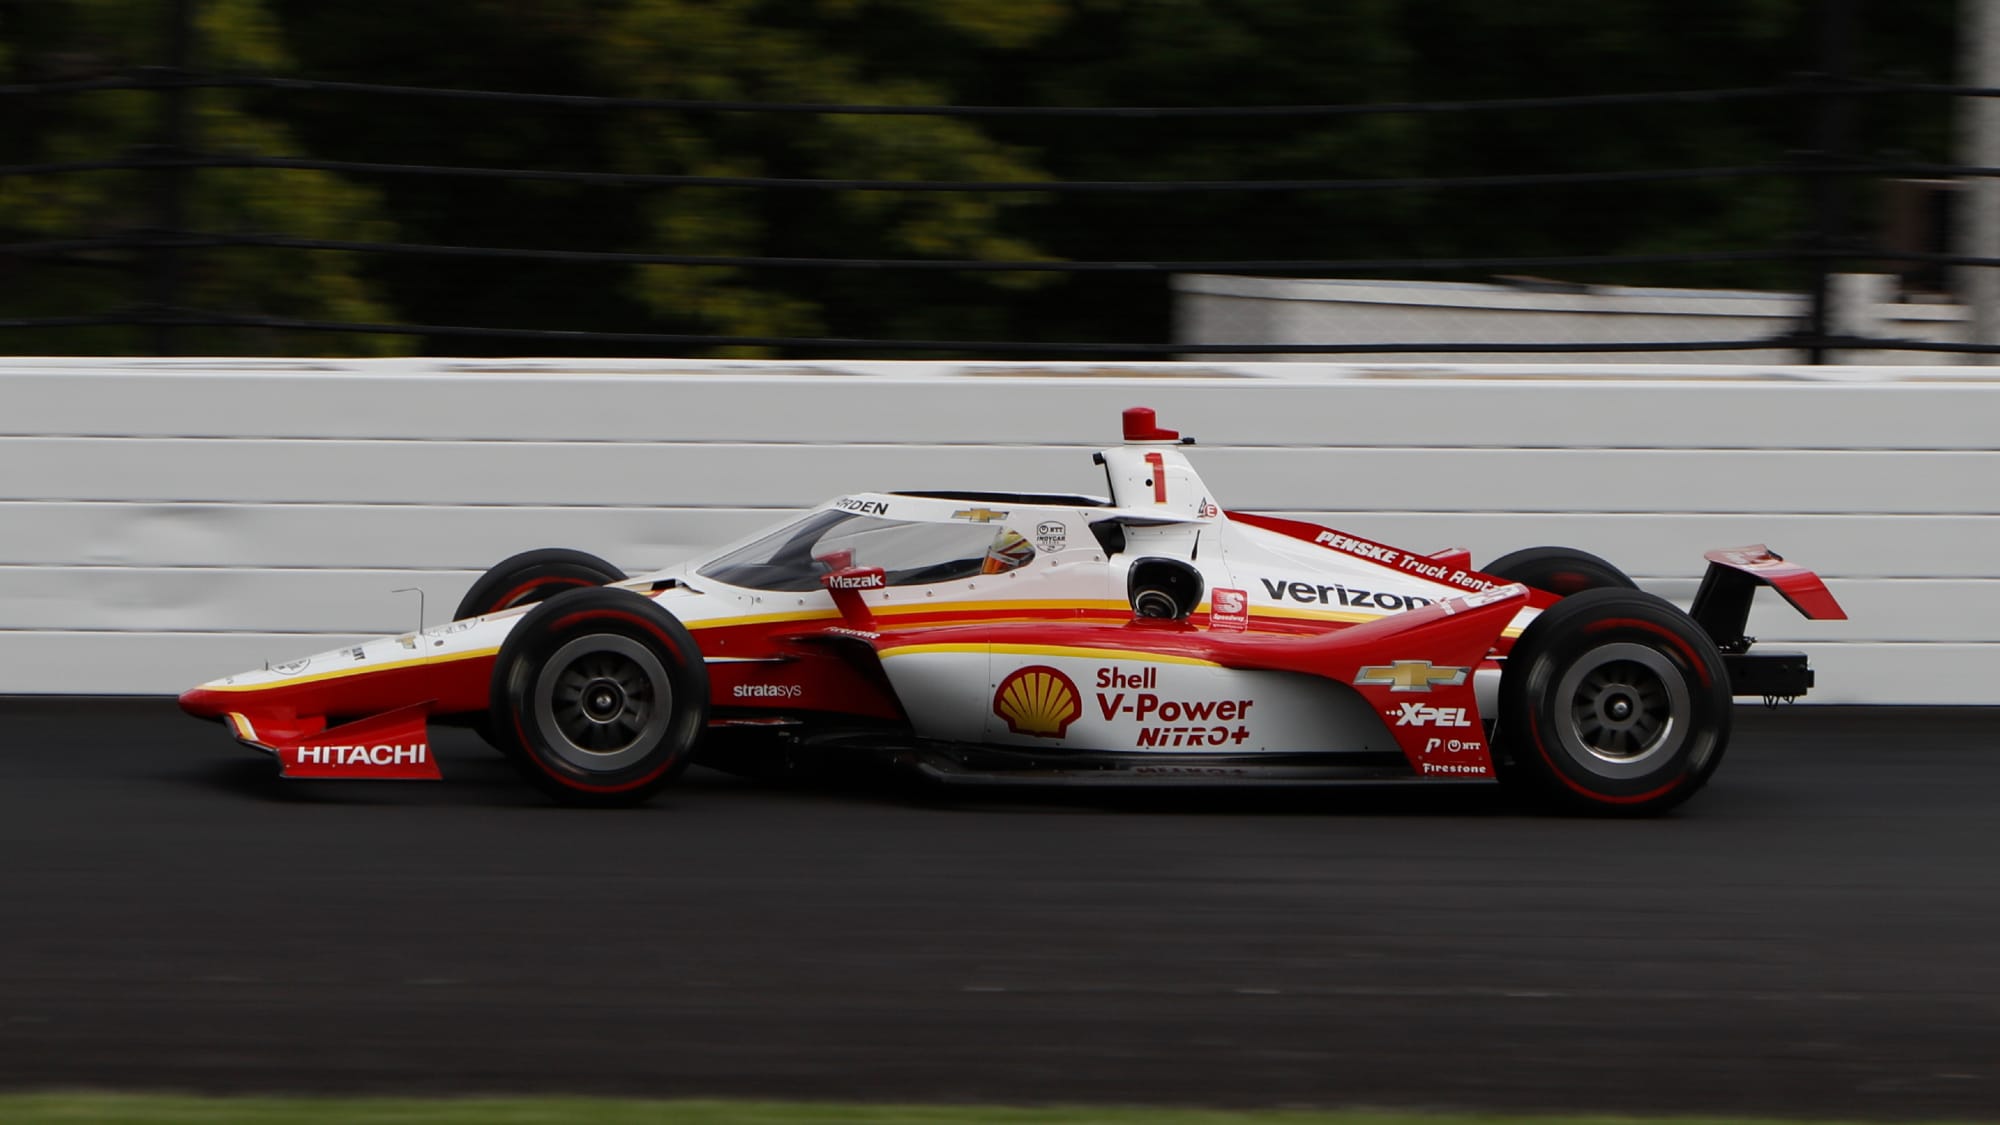 Josef Newgarden, 2020 Indy 500